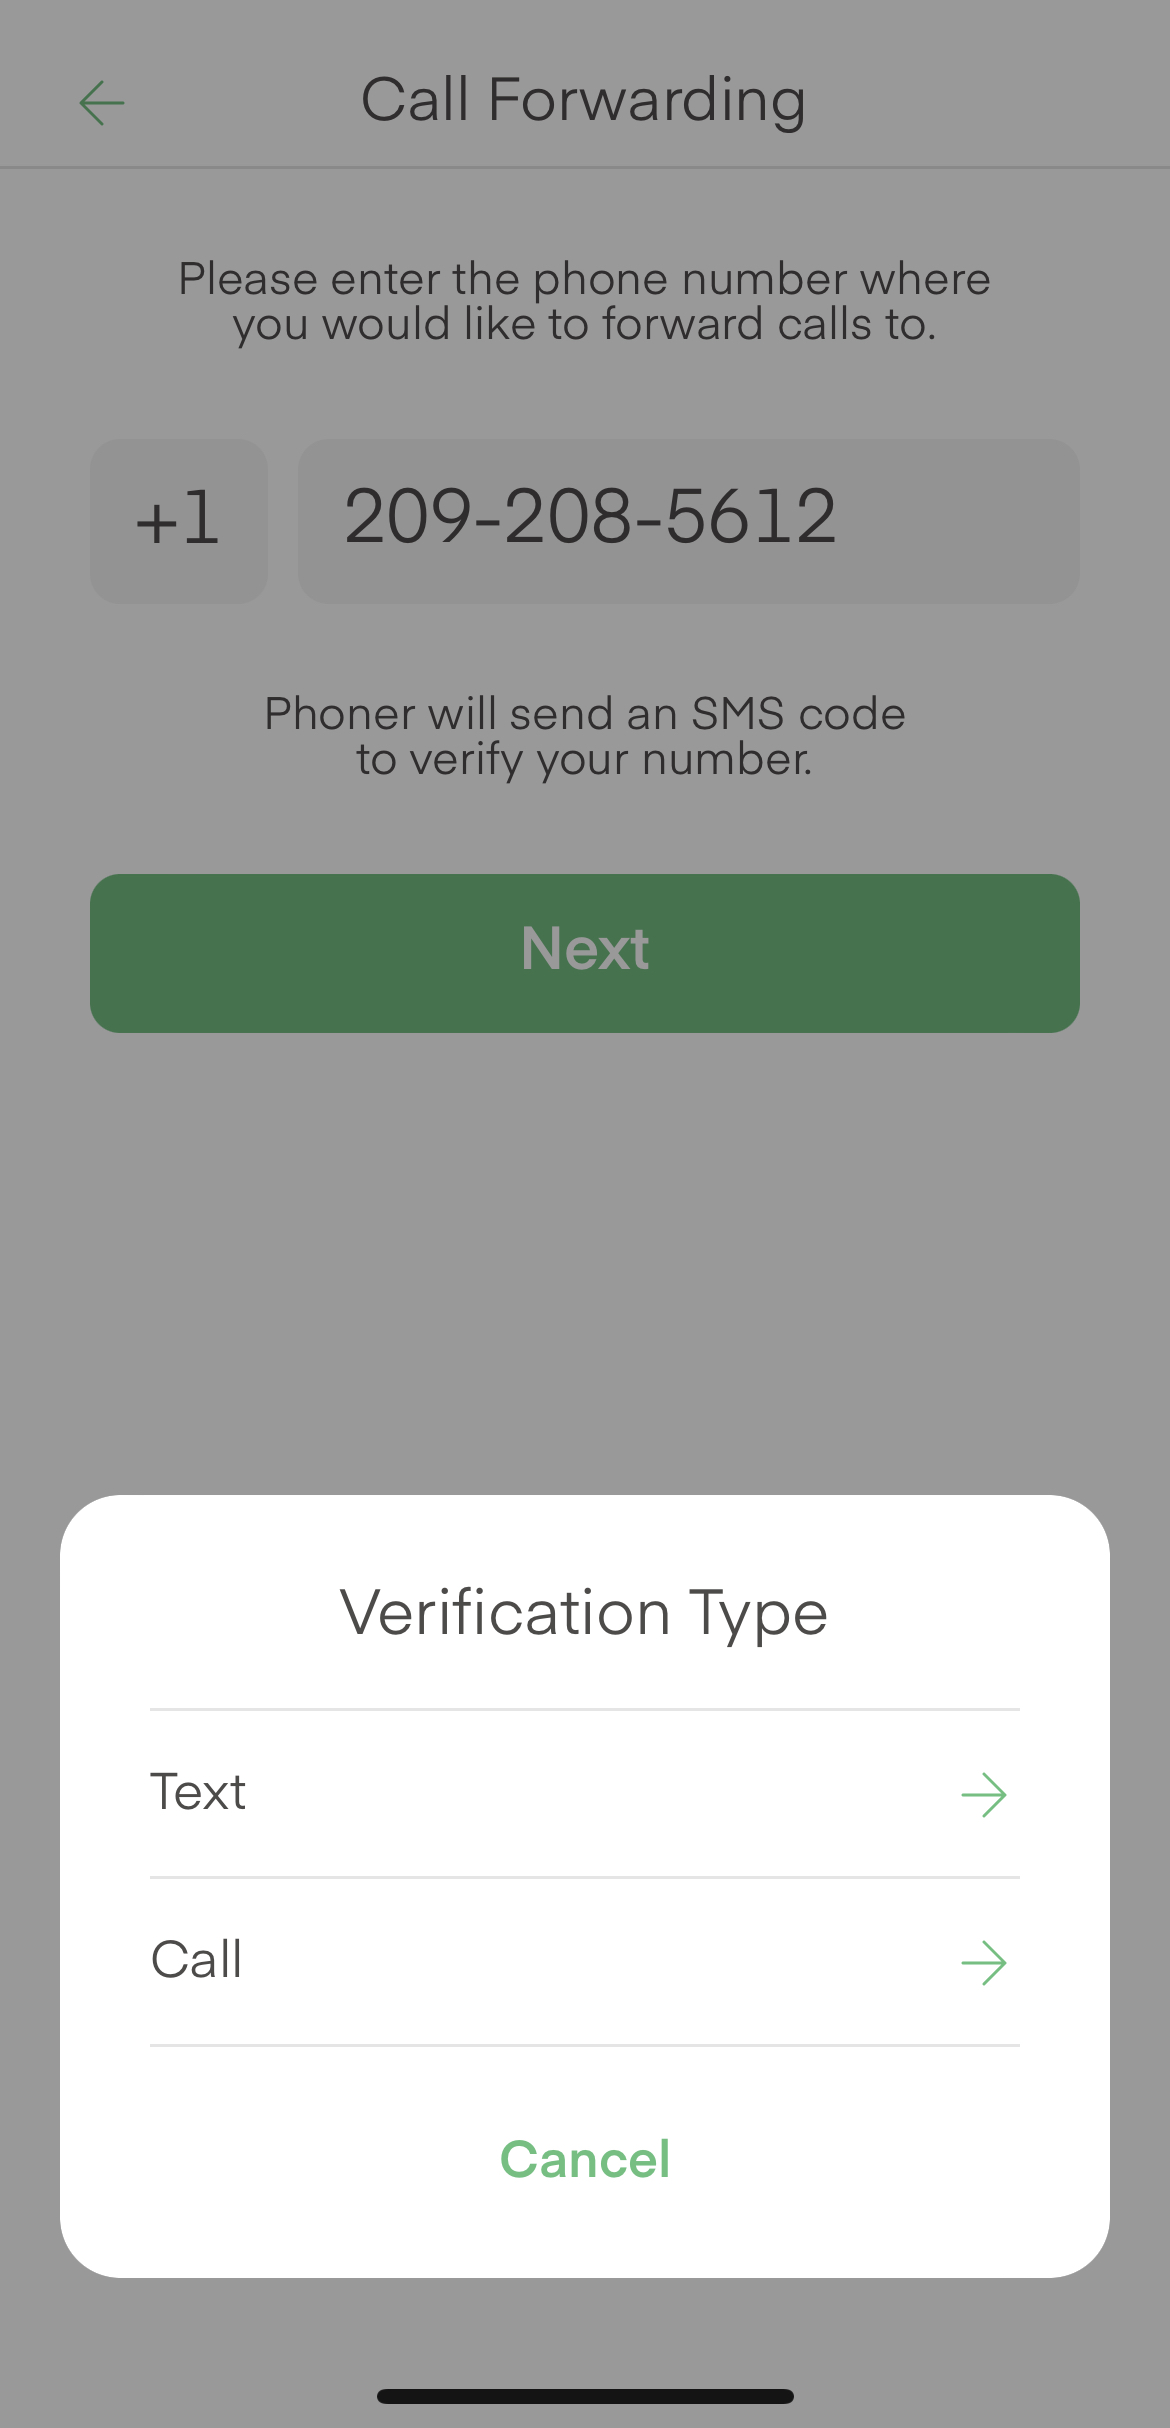 Phoner_Verification_Type_Text-Call.jpeg